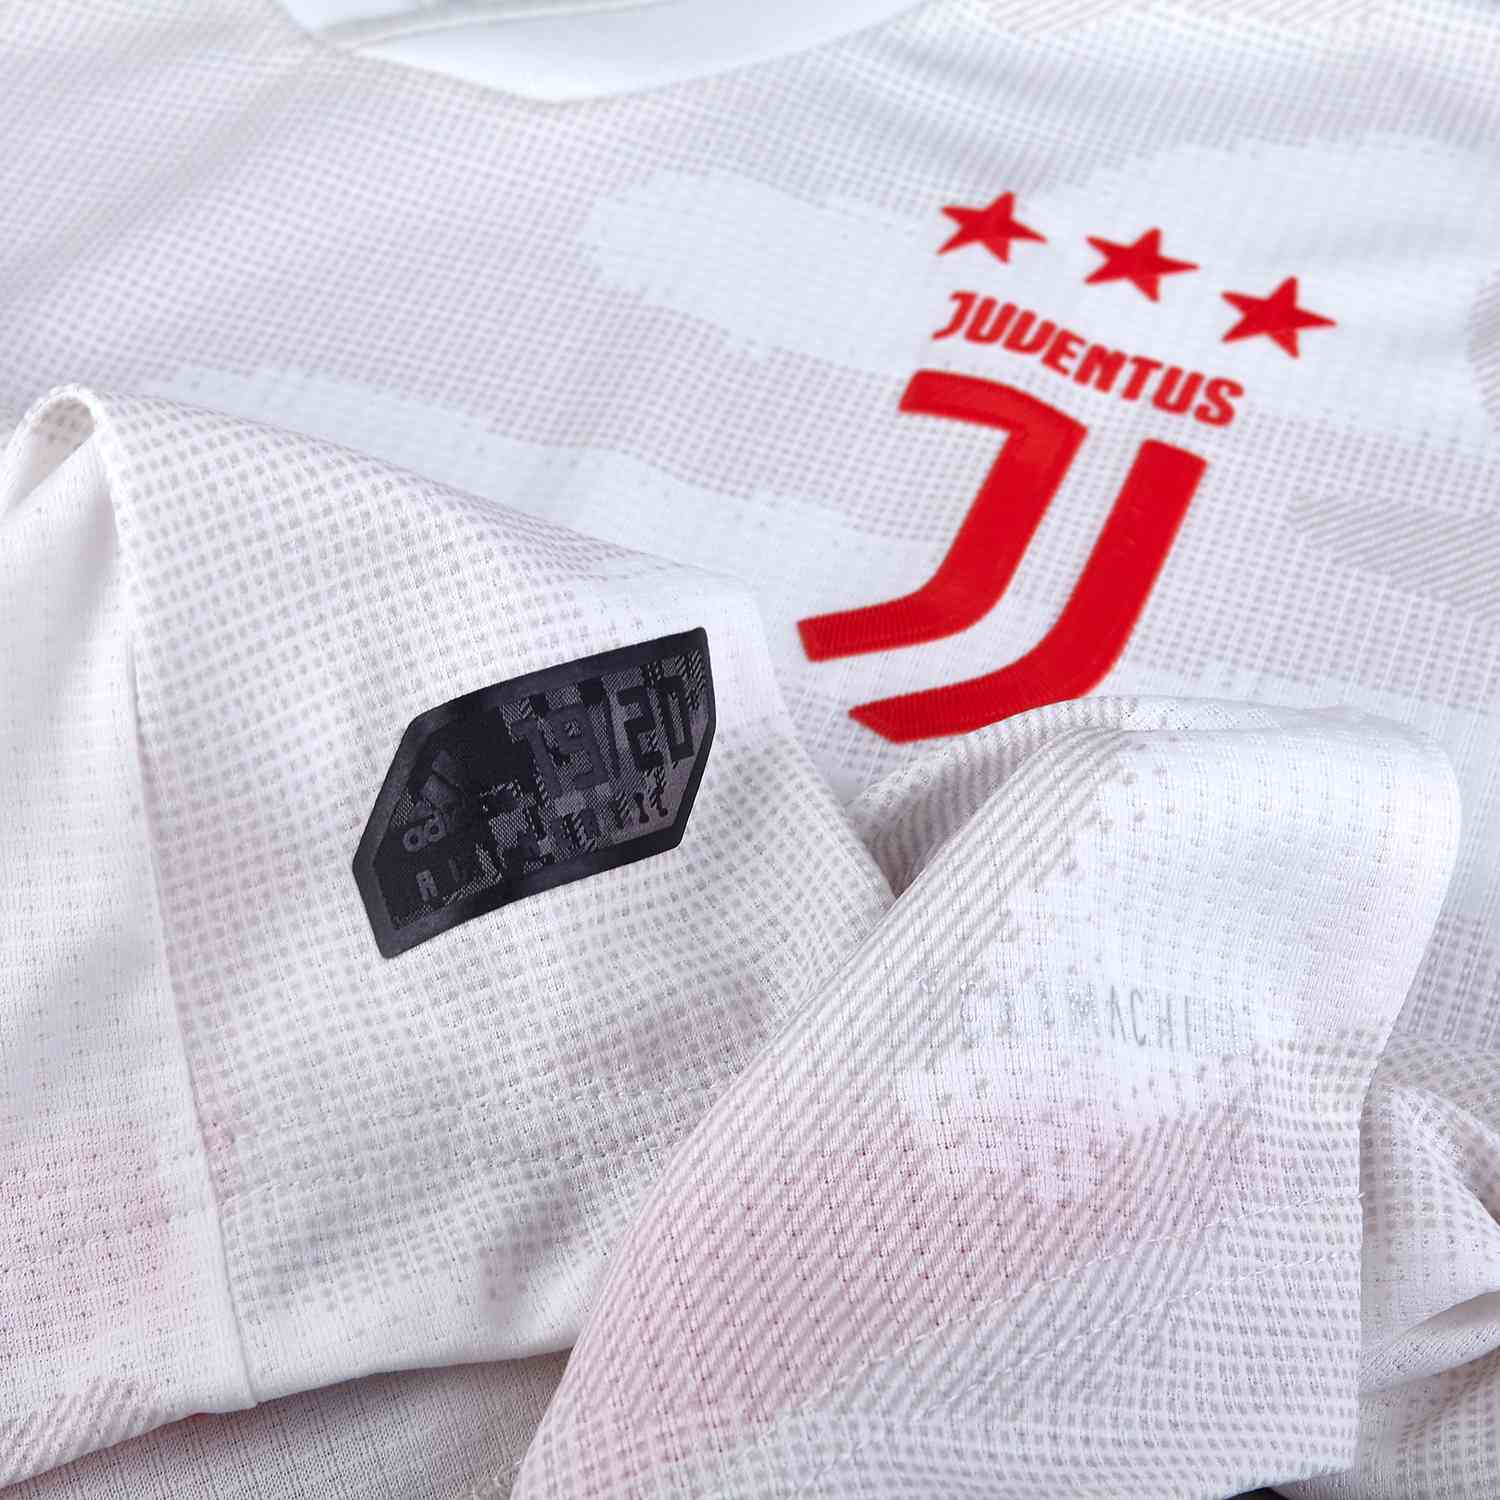 2019/20 adidas Cristiano Ronaldo Juventus Away Authentic Jersey ...